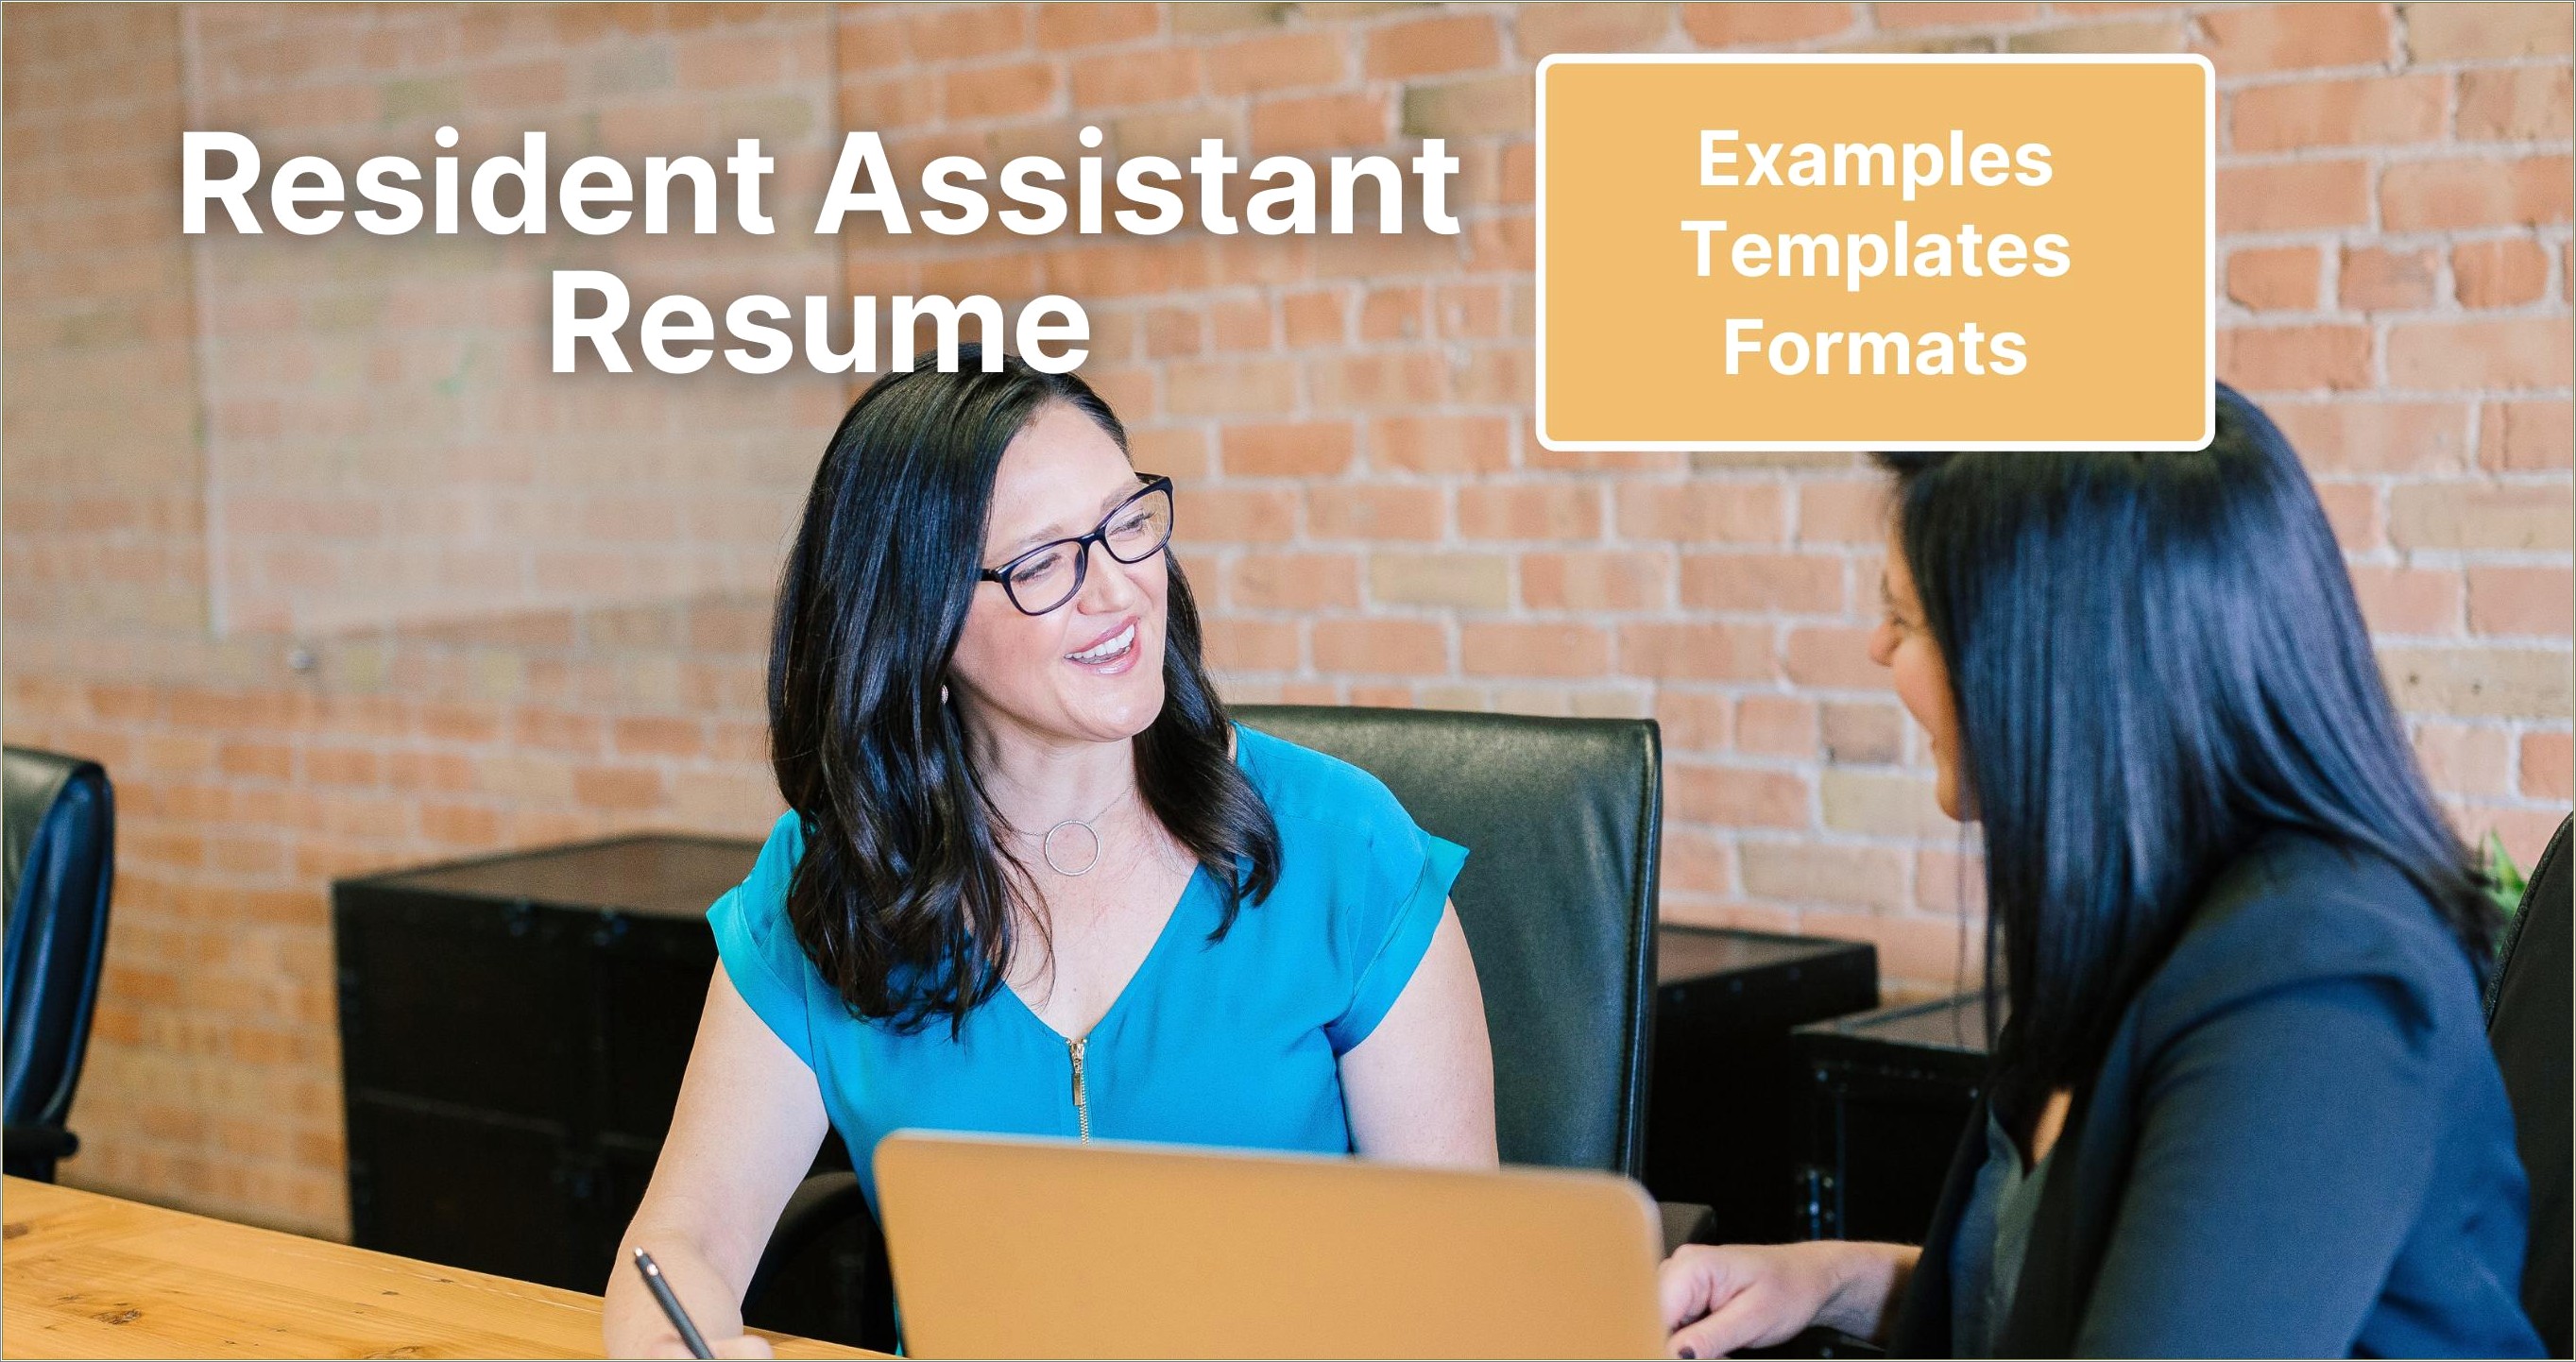 Job Description Of A Resident Assistant For Resume